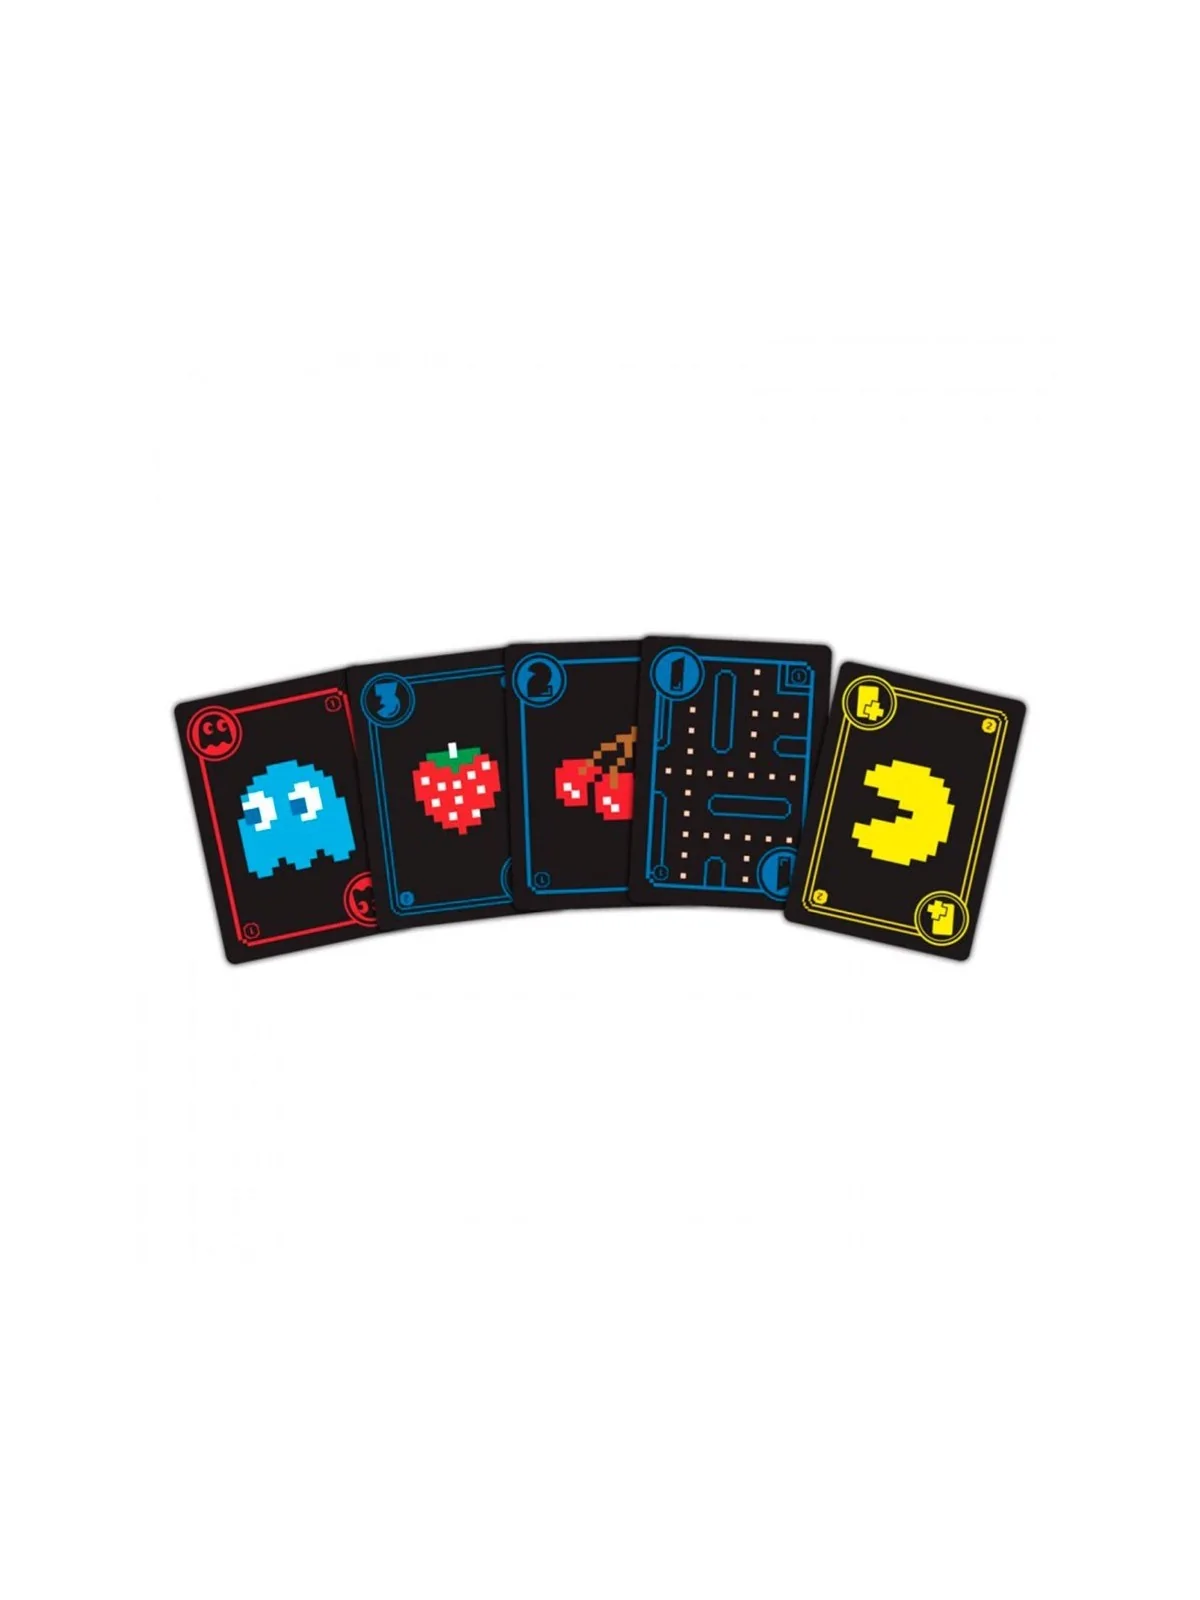 Comprar Pac-Man: The Card Game (Multi-Idioma) barato al mejor precio 8